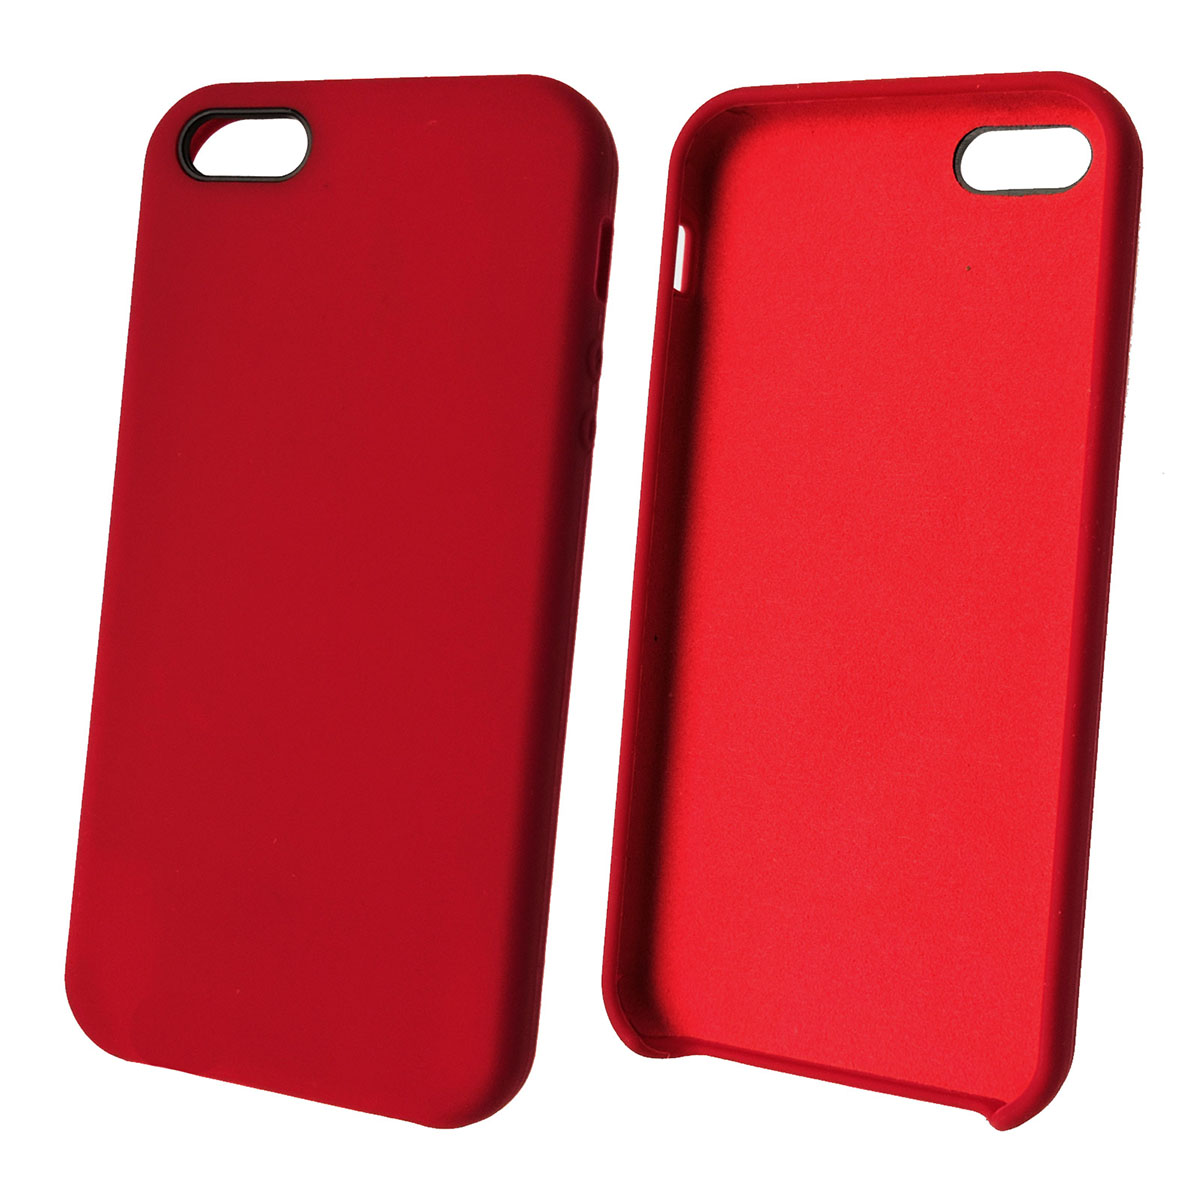 Чехол накладка Silicon Case для APPLE iPhone 5, 5S, SE, силикон, бархат, цвет красная роза.